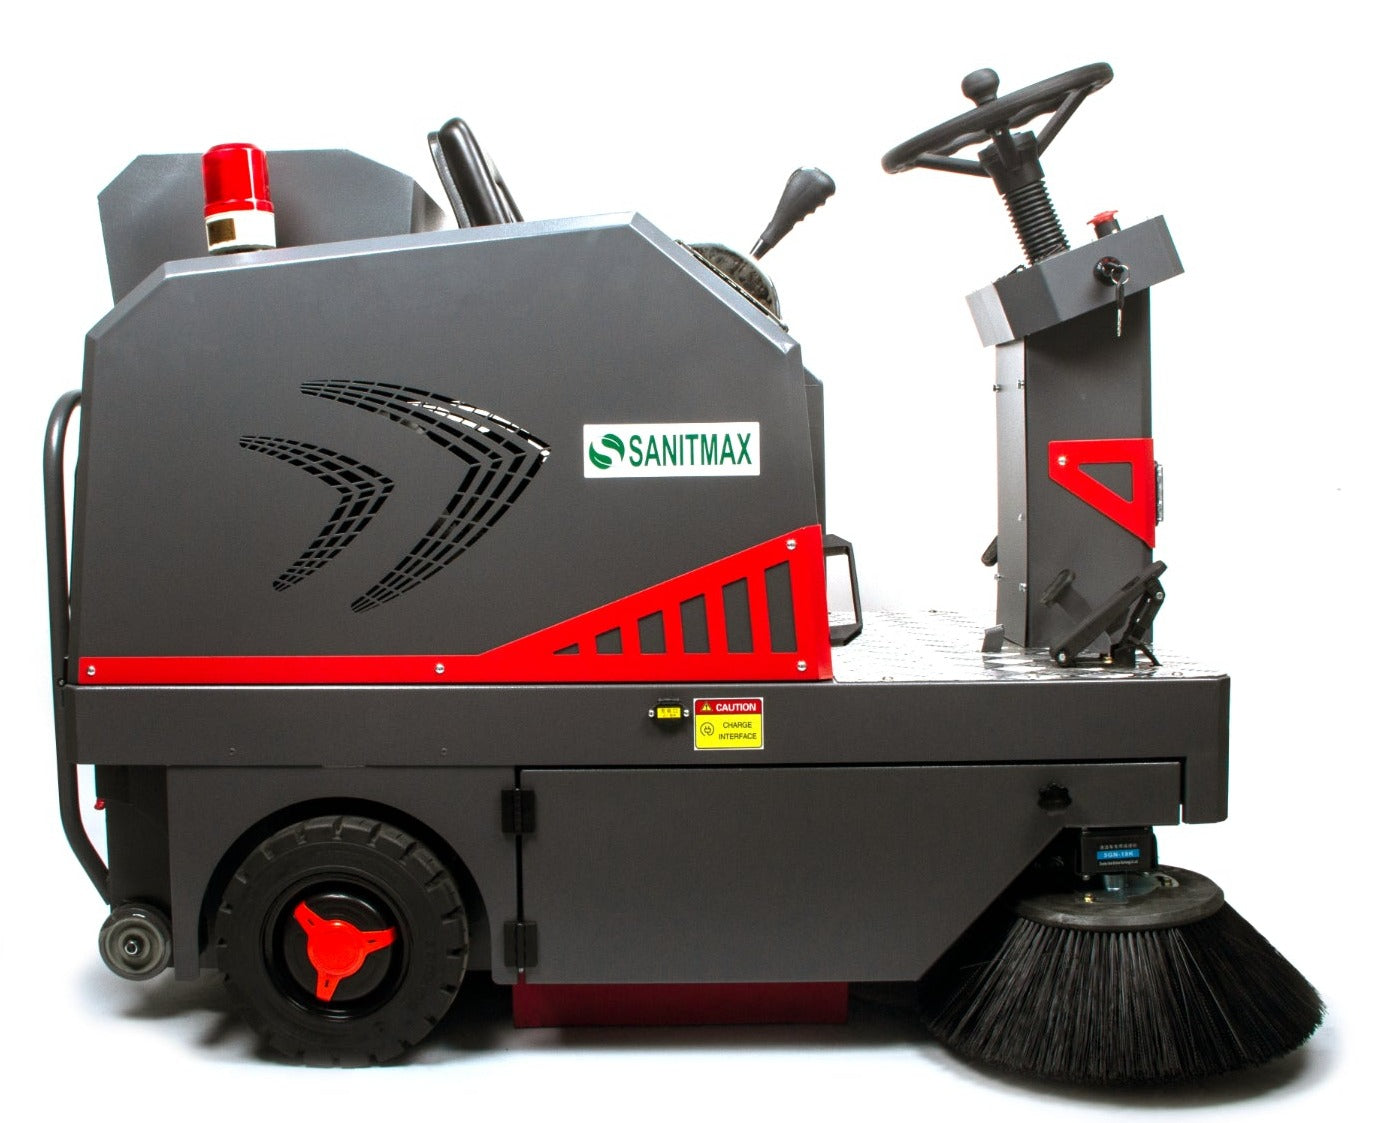 SM1250+ 49" Ride-on Industrial Floor Sweeper,  69000 Sqft/h, 3.5 hr Fast Charging Lithium Battery